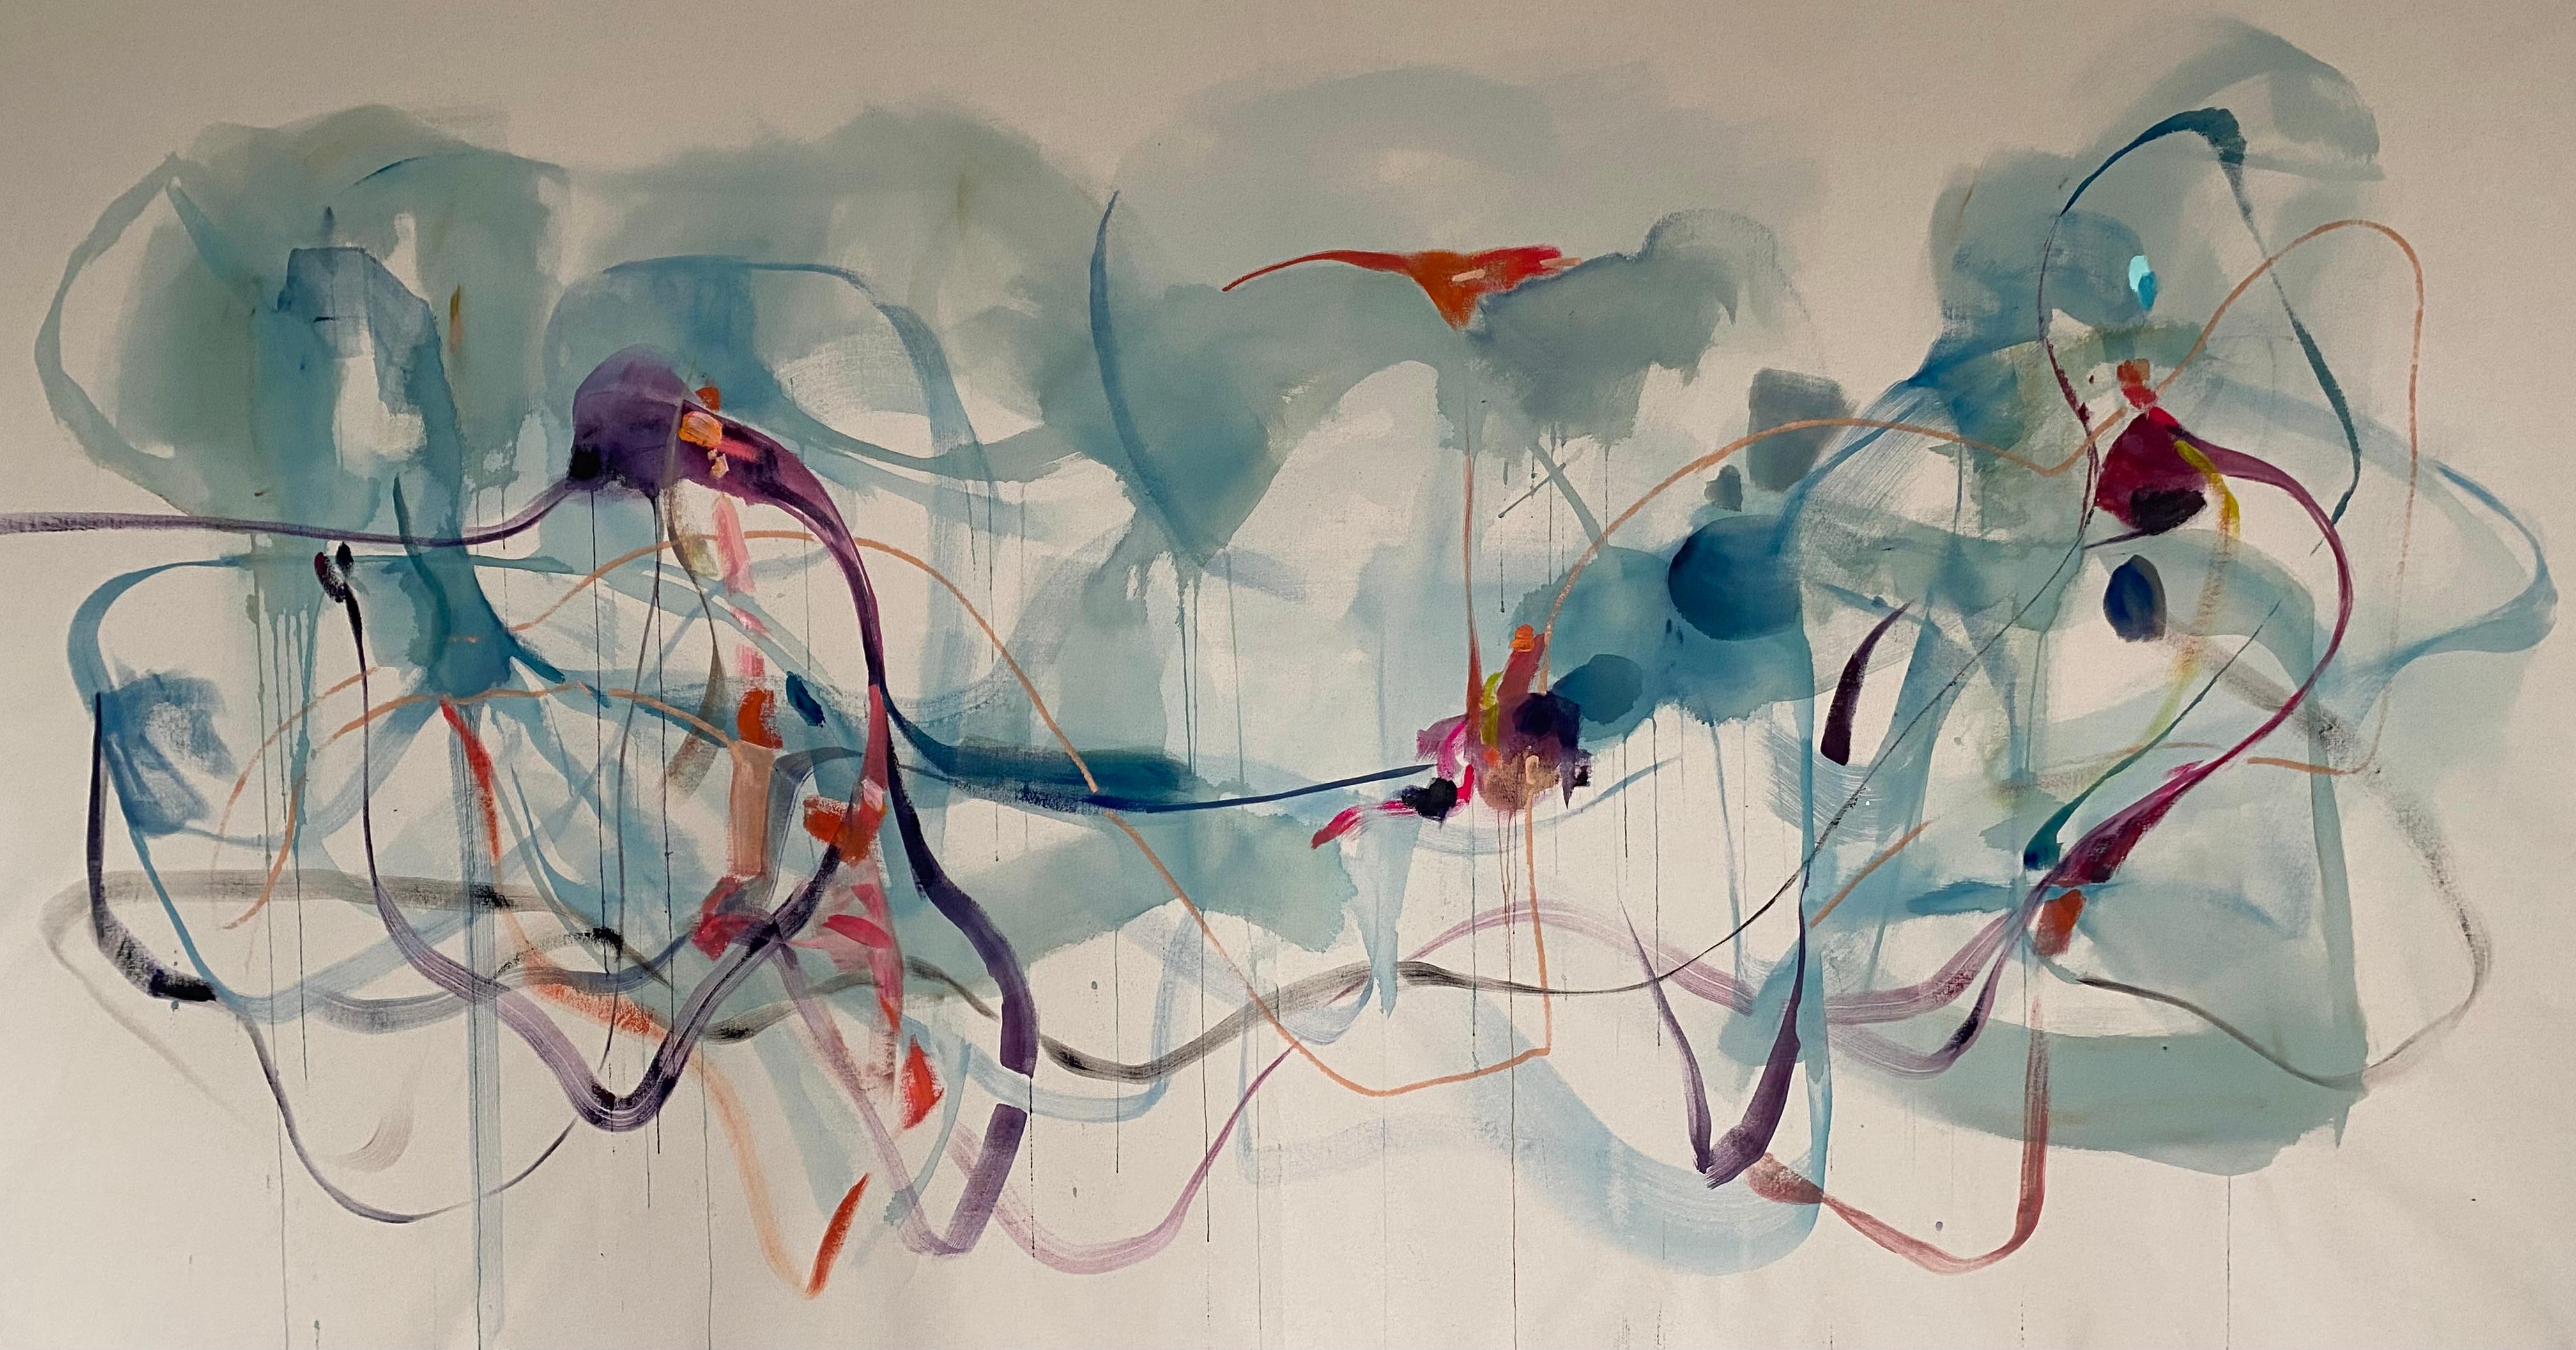 Abstract Painting Vicky Barranguet - Dream II d'été